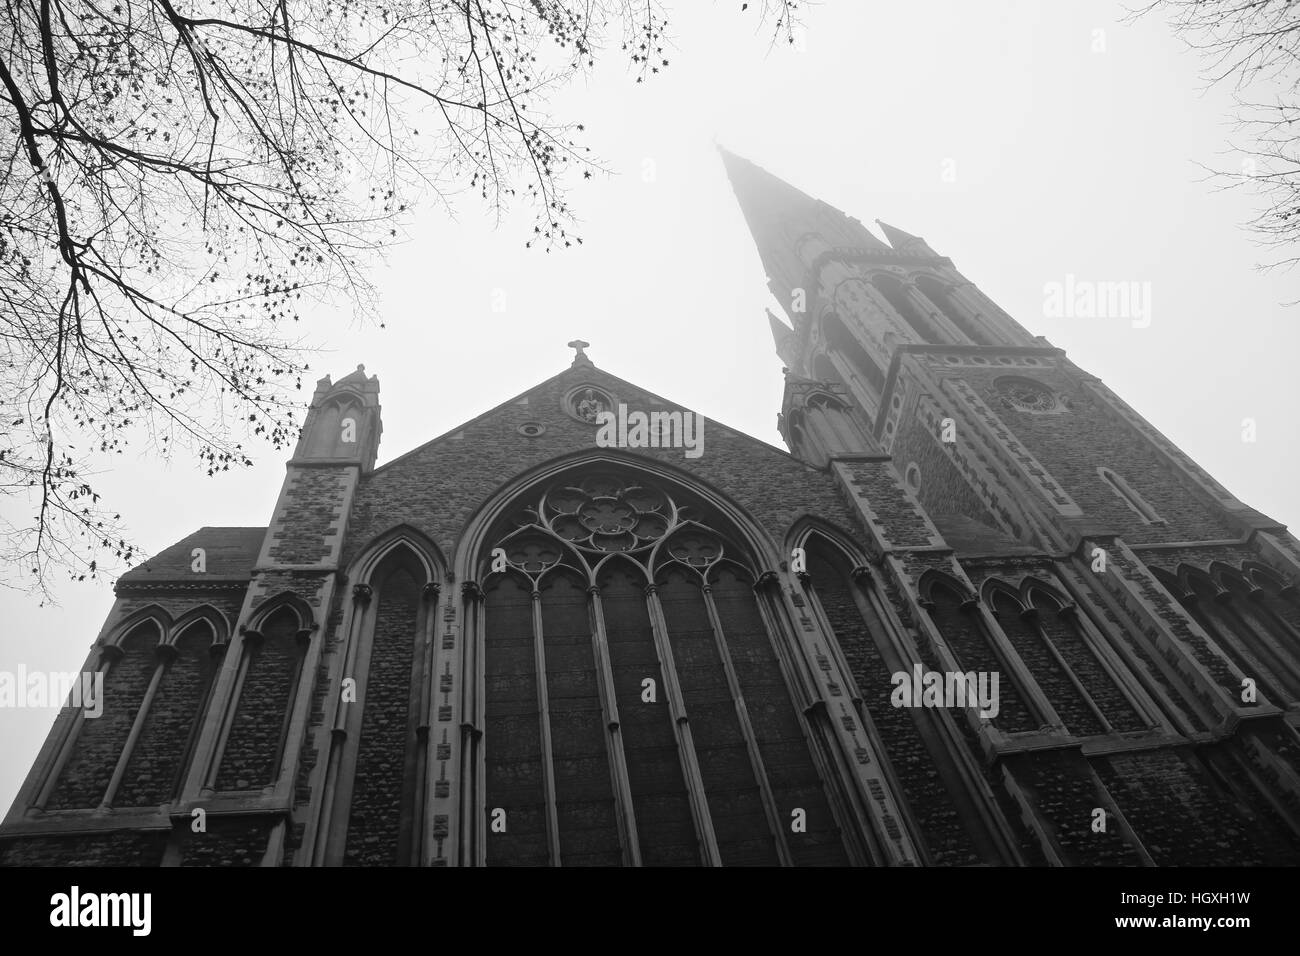 Fog rolls around the steeple of St, Matthews Church in Bayswater, London, England. Stock Photo